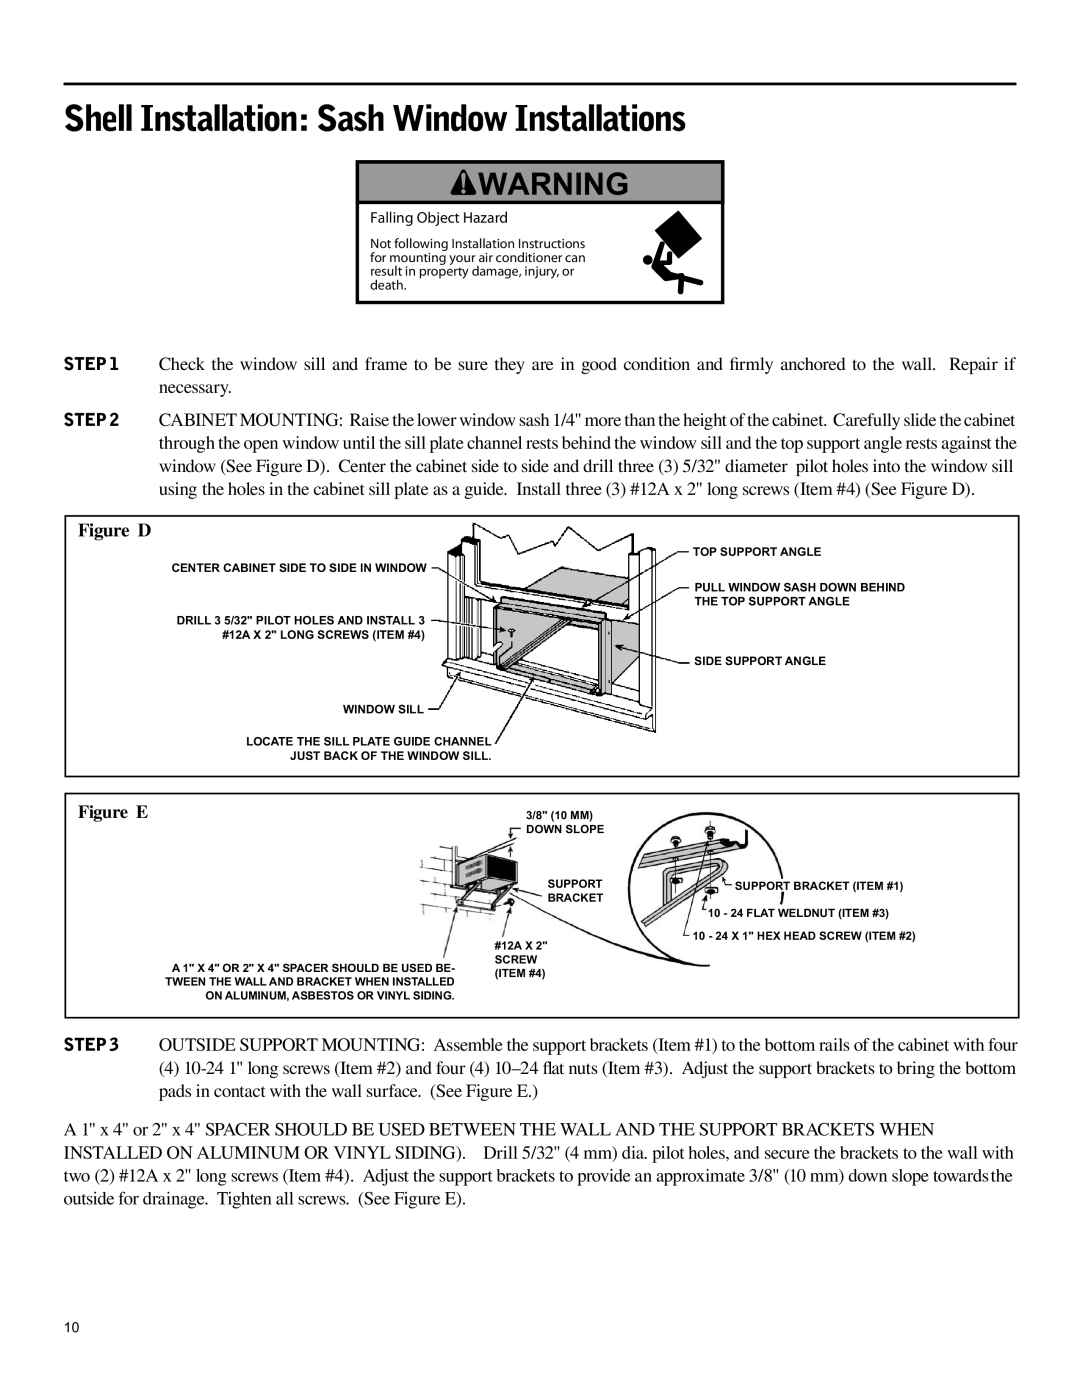 Friedrich SH15 operation manual Shell Installation Sash Window Installations, Falling Object Hazard 